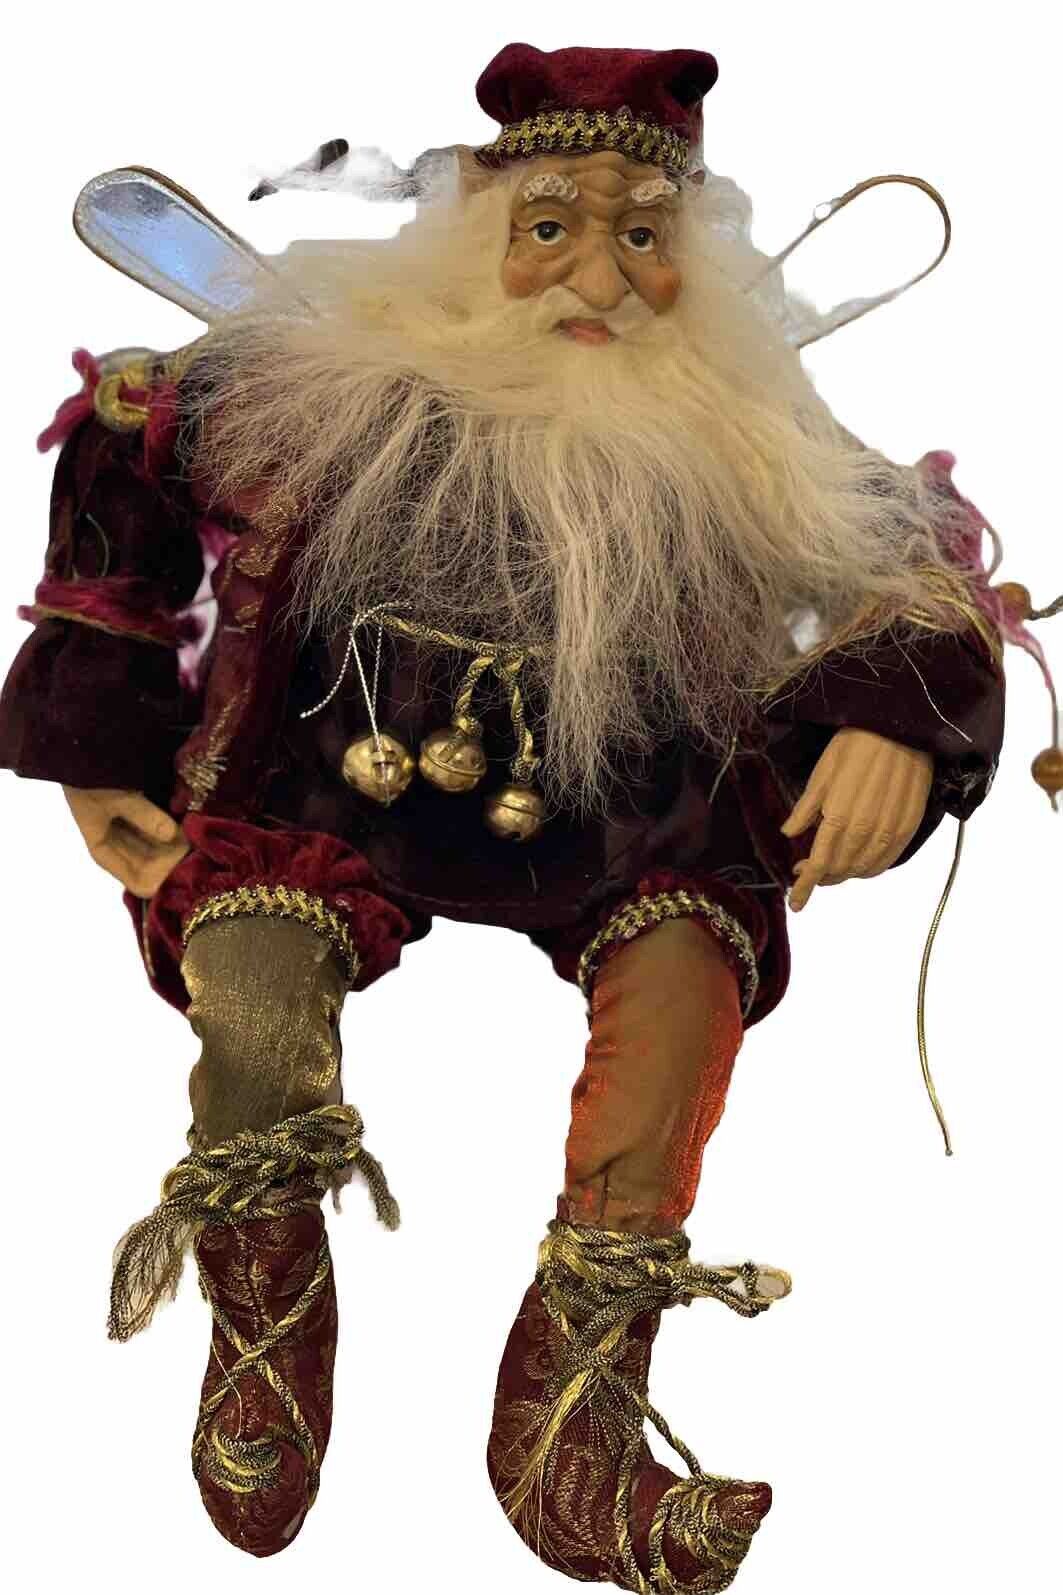 VTG Jo-Ann Stores Christmas Shelf Sitter Santa Claus Fairy with Wings PLS READ